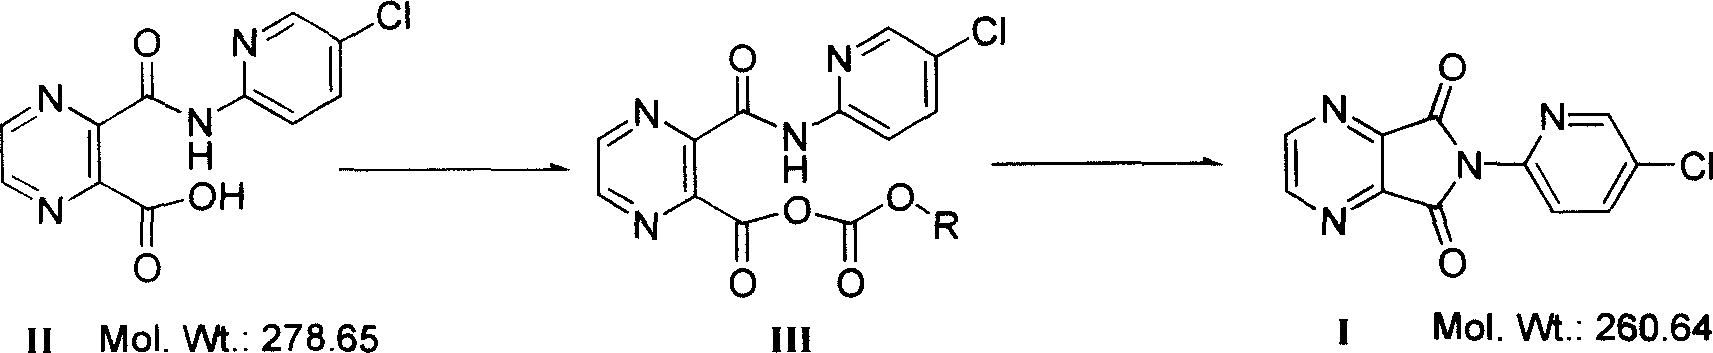 Method of preparing eszopiclone intermediate 6-(5-chloro-2-pyridyl)-5,7-dioxy-6,7-dihydro-5H-pyrrolo[3,4-b] pyrazine